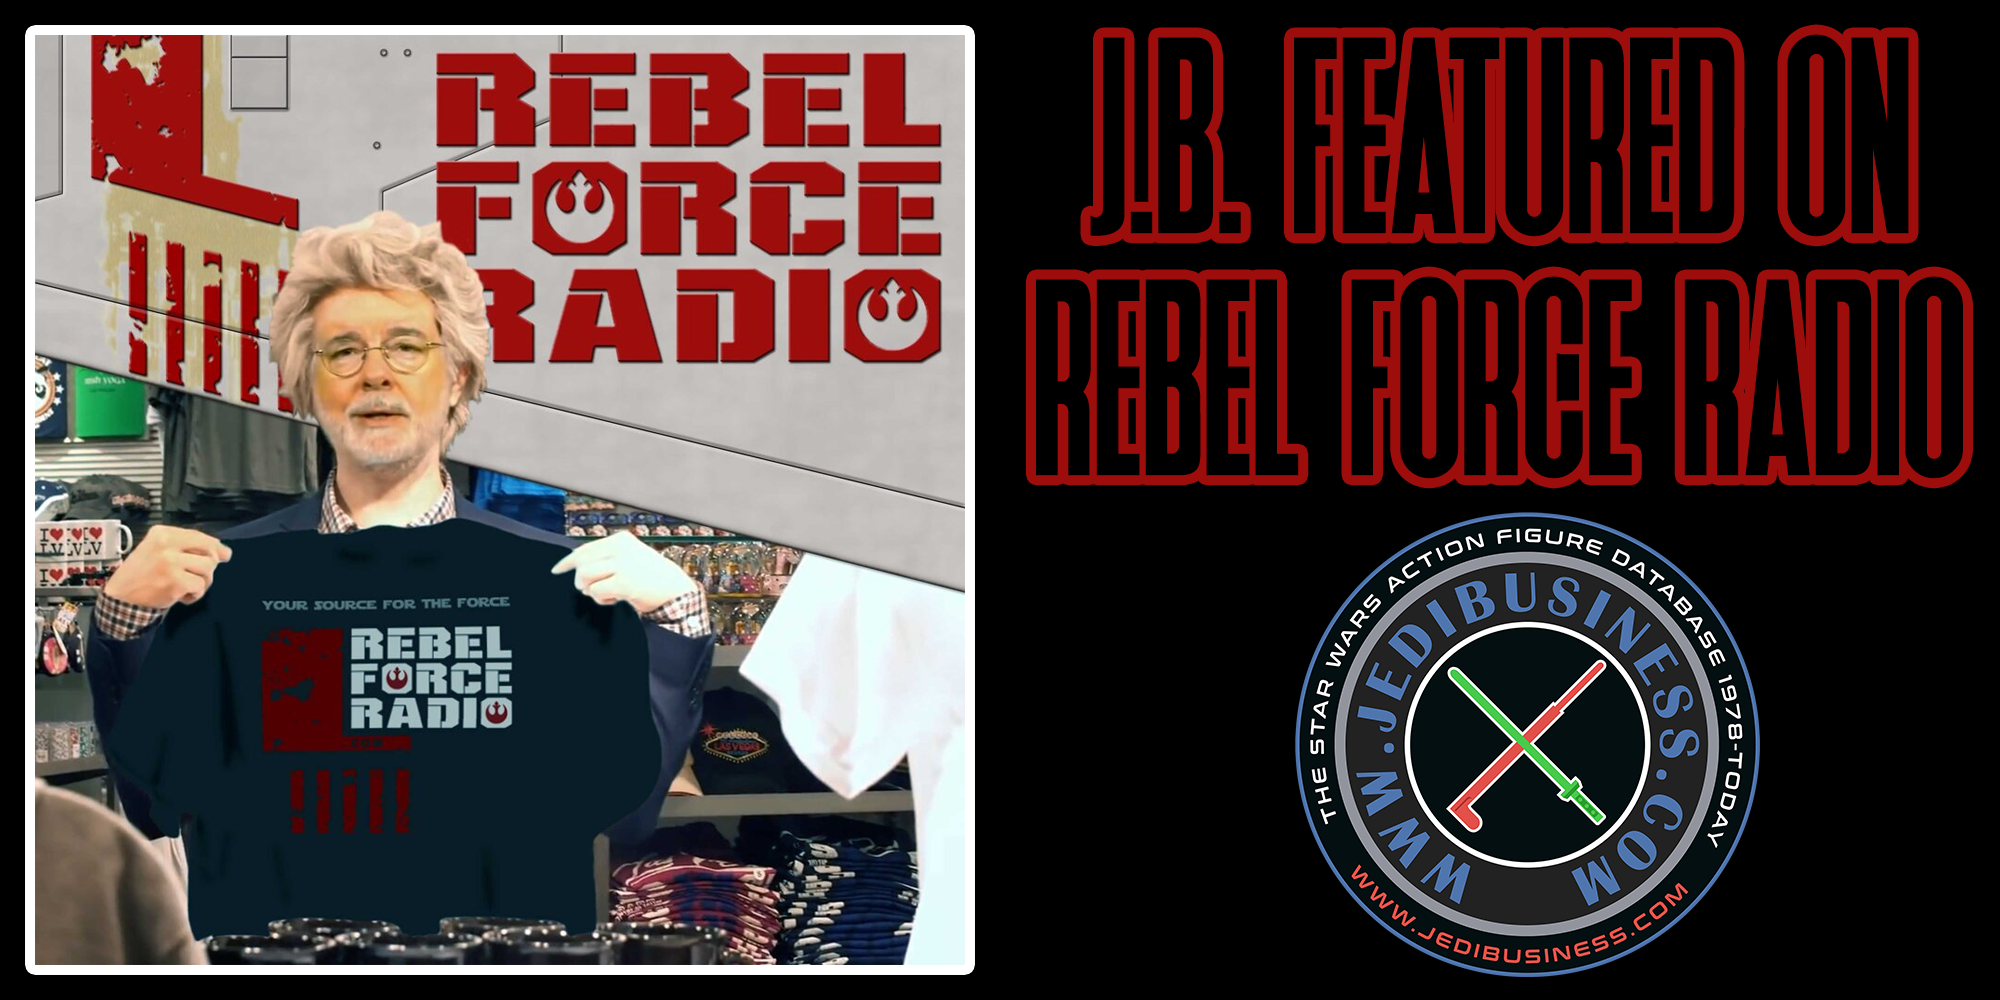 J.B. Featured On Rebel Force Radio